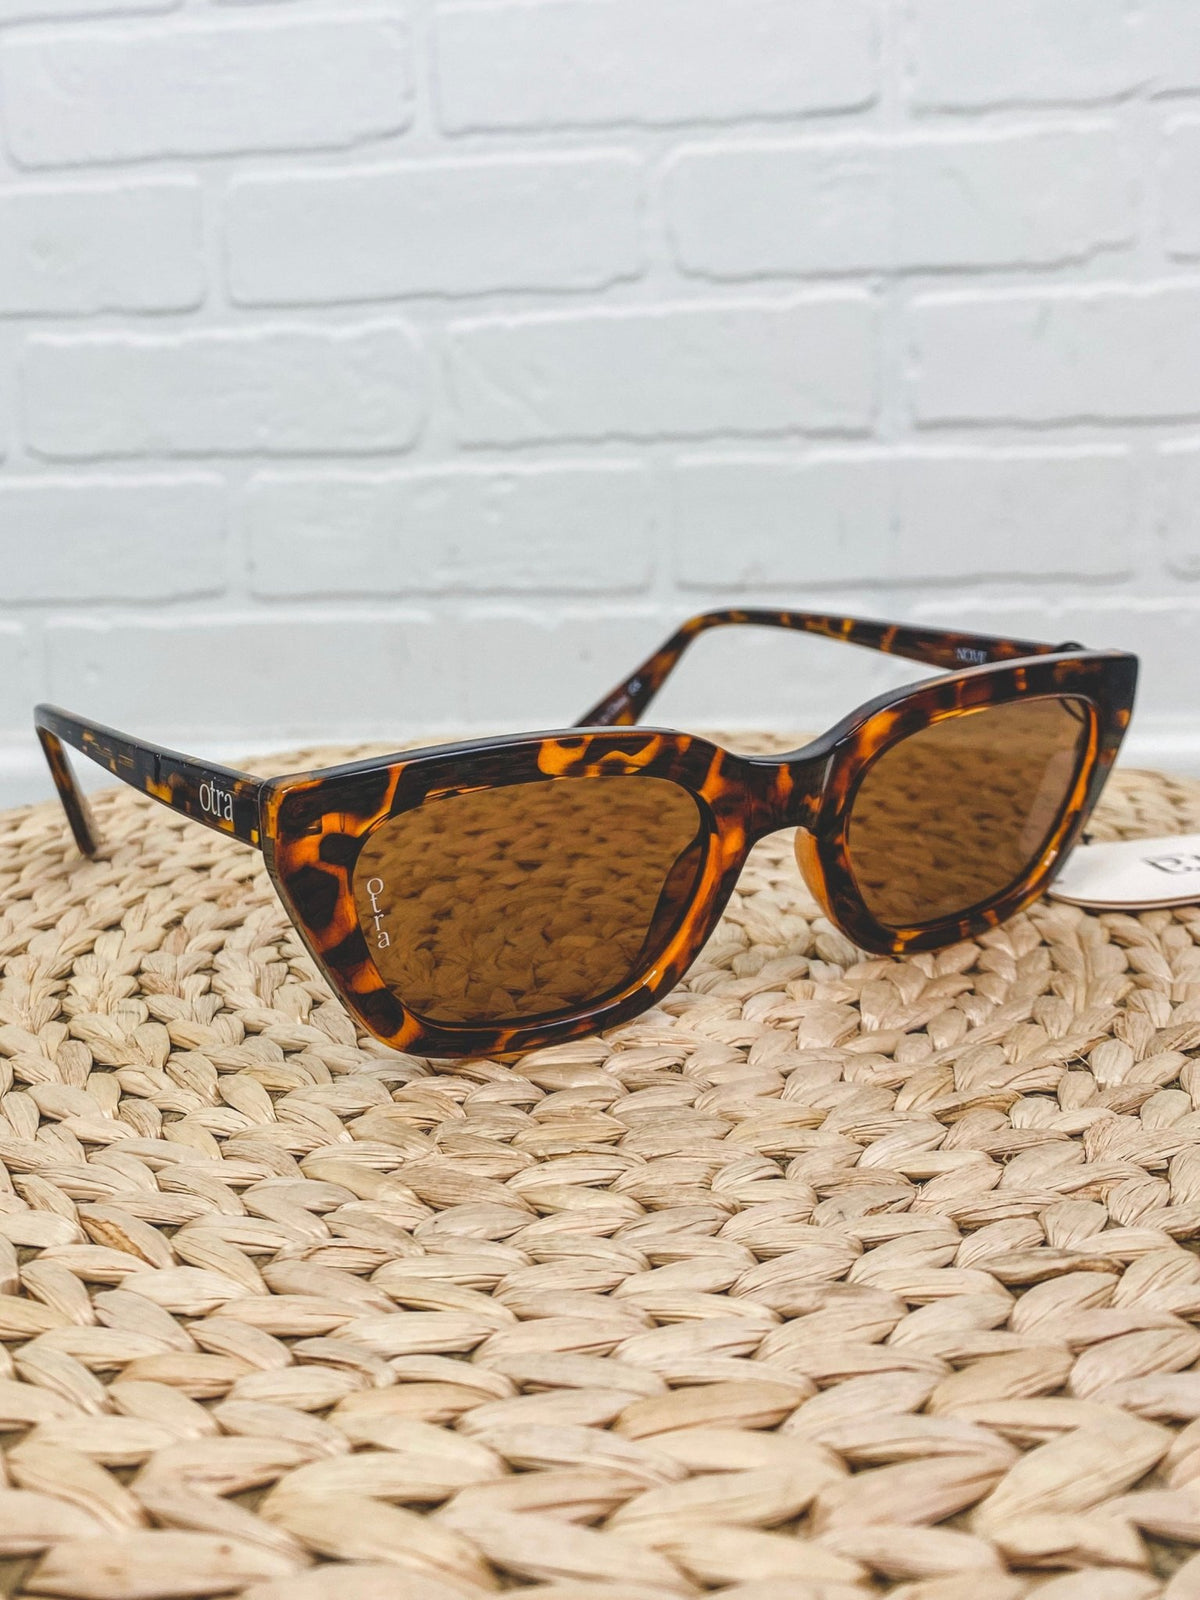 Otra Nove sunglasses tortoise/brown - Stylish Sunglasses - Cute Sunglasses at Lush Fashion Lounge Boutique in Oklahoma